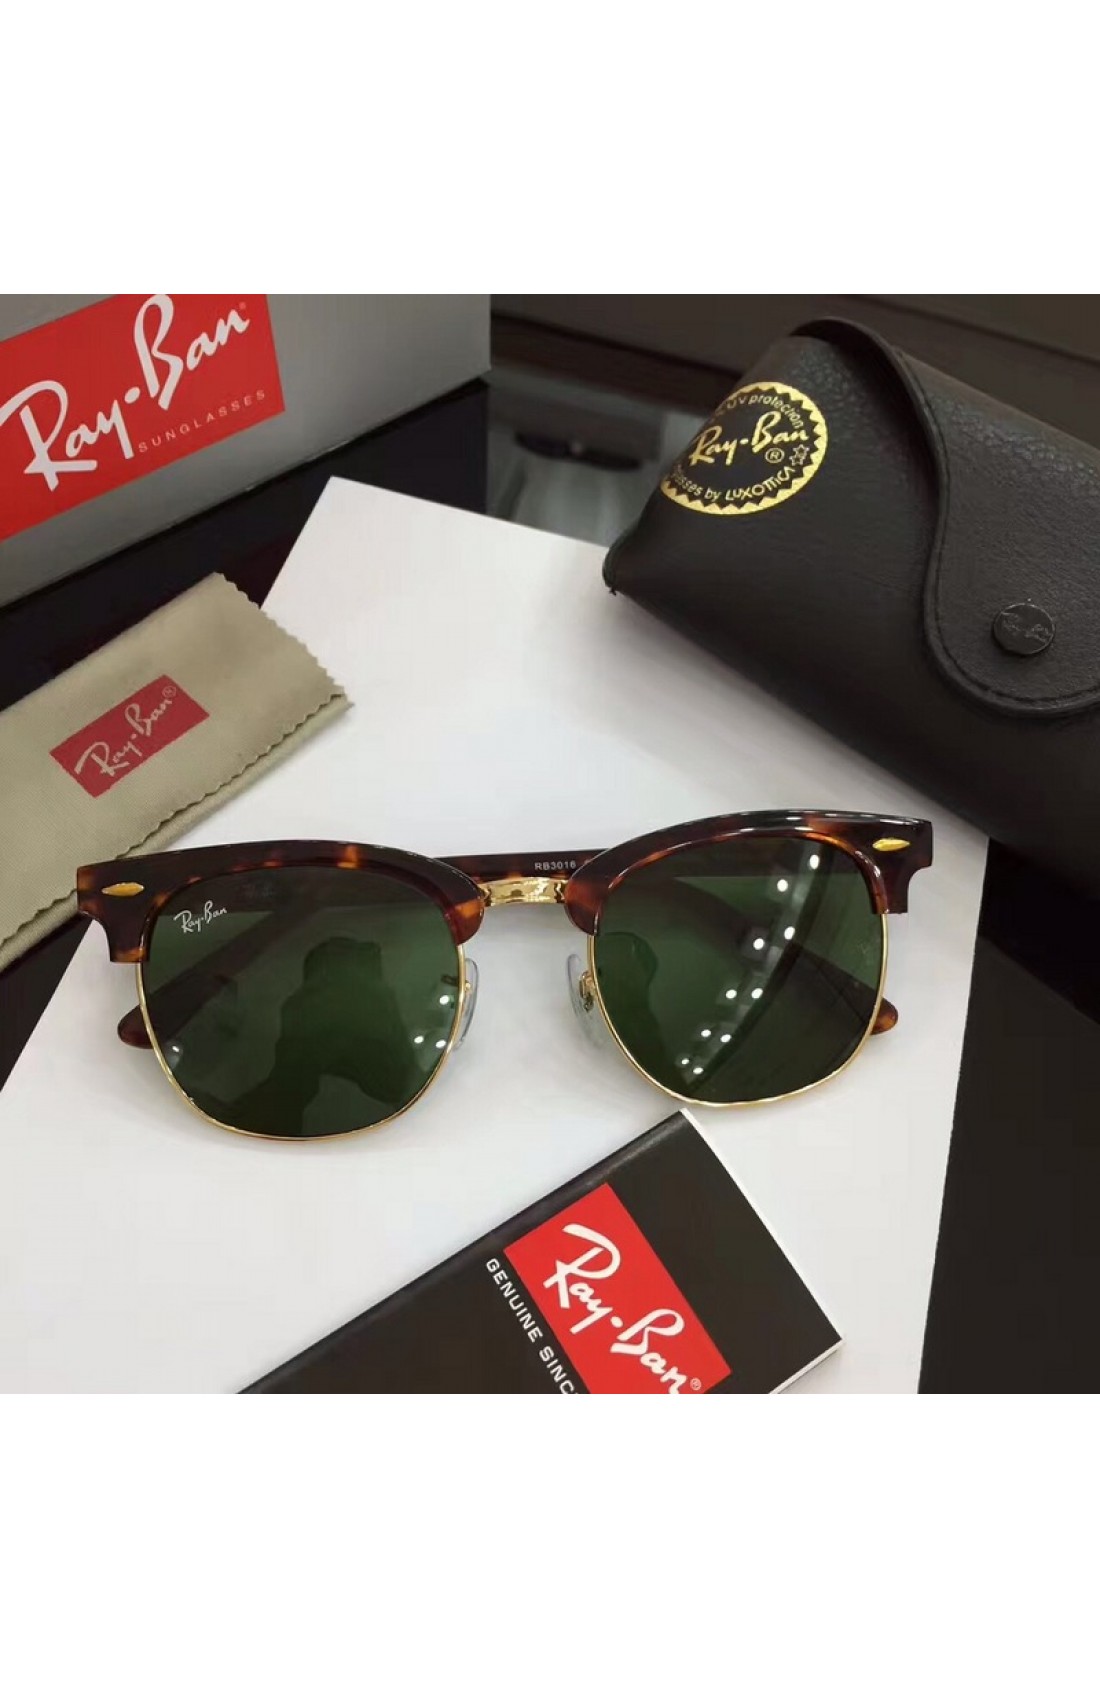 ray ban womens sunglasses on sale